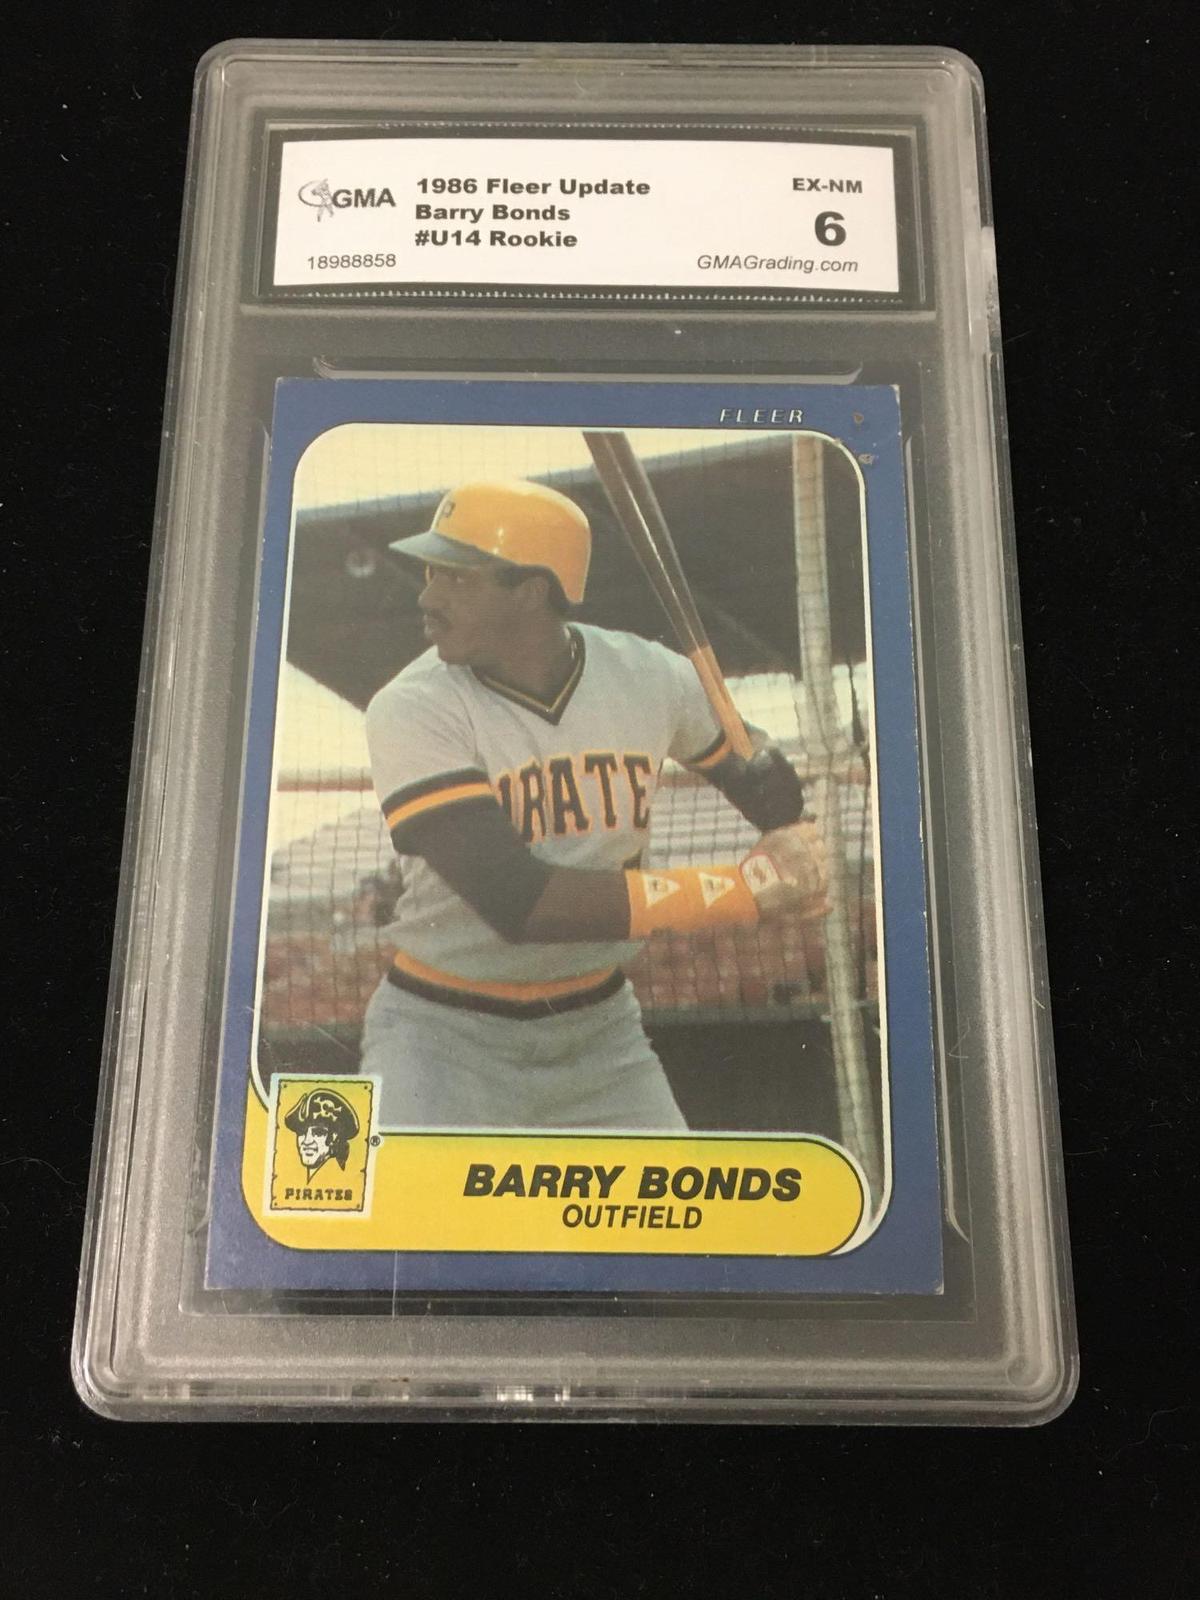 GMA Graded 1986 Fleer Update Barry Bonds Pirates Giants Rookie Baseball Card - EX-NM 6